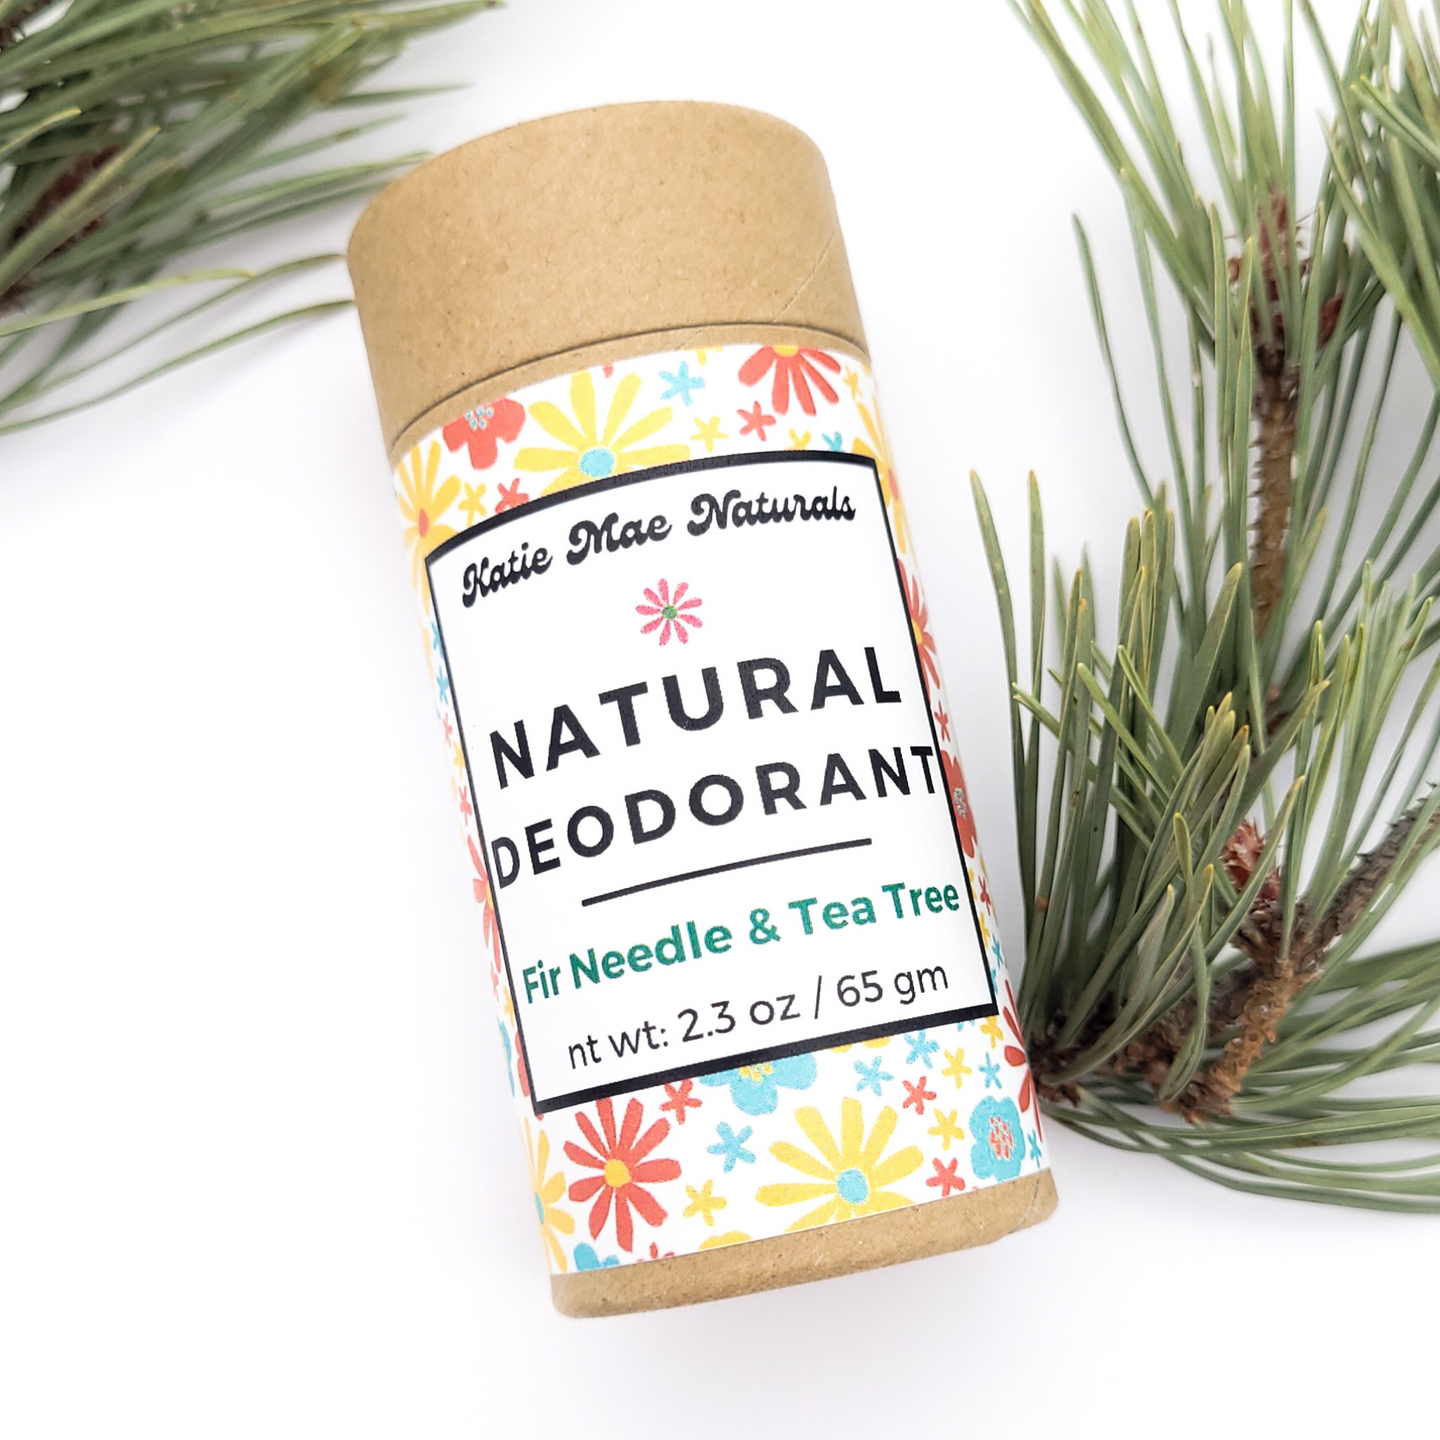 Fir needle and Tea tree zero waste natural deodorant 